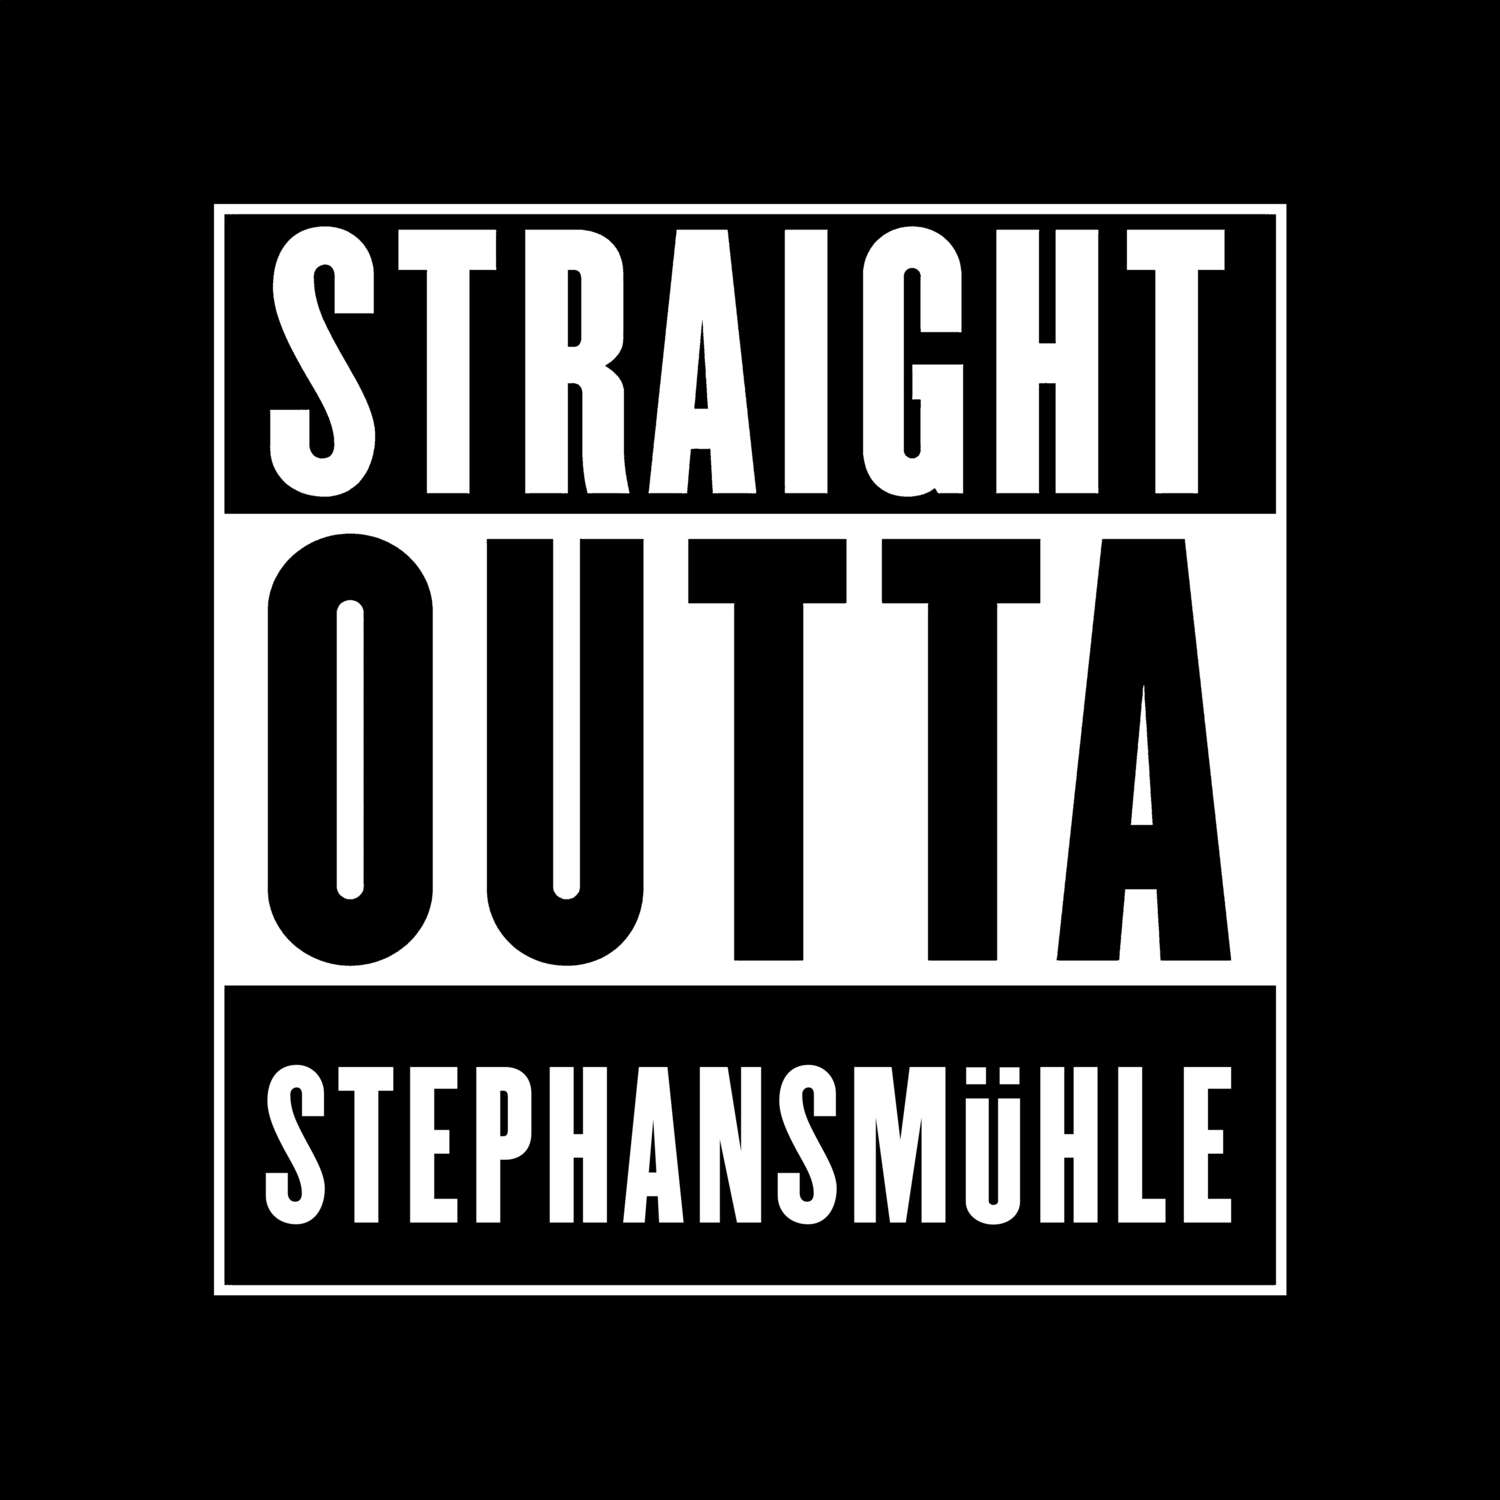 Stephansmühle T-Shirt »Straight Outta«